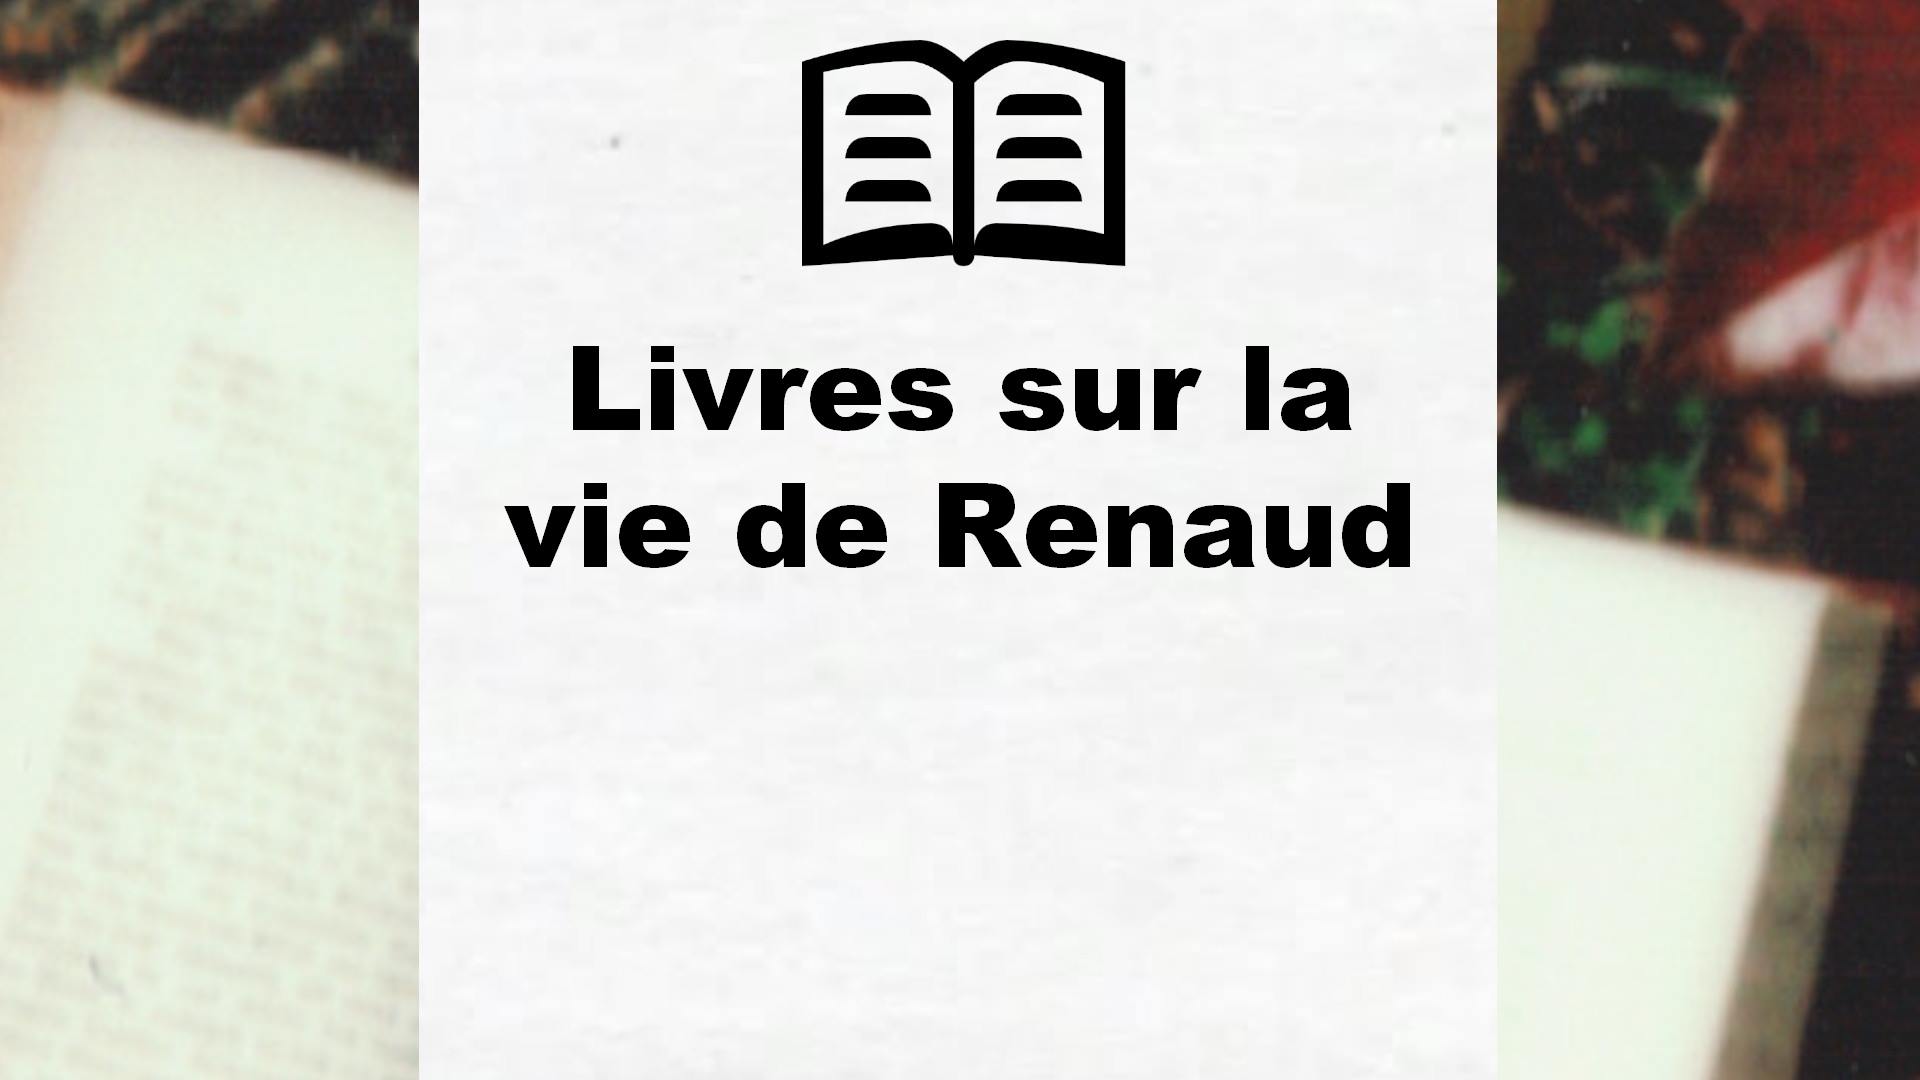 Livres sur la vie de Renaud